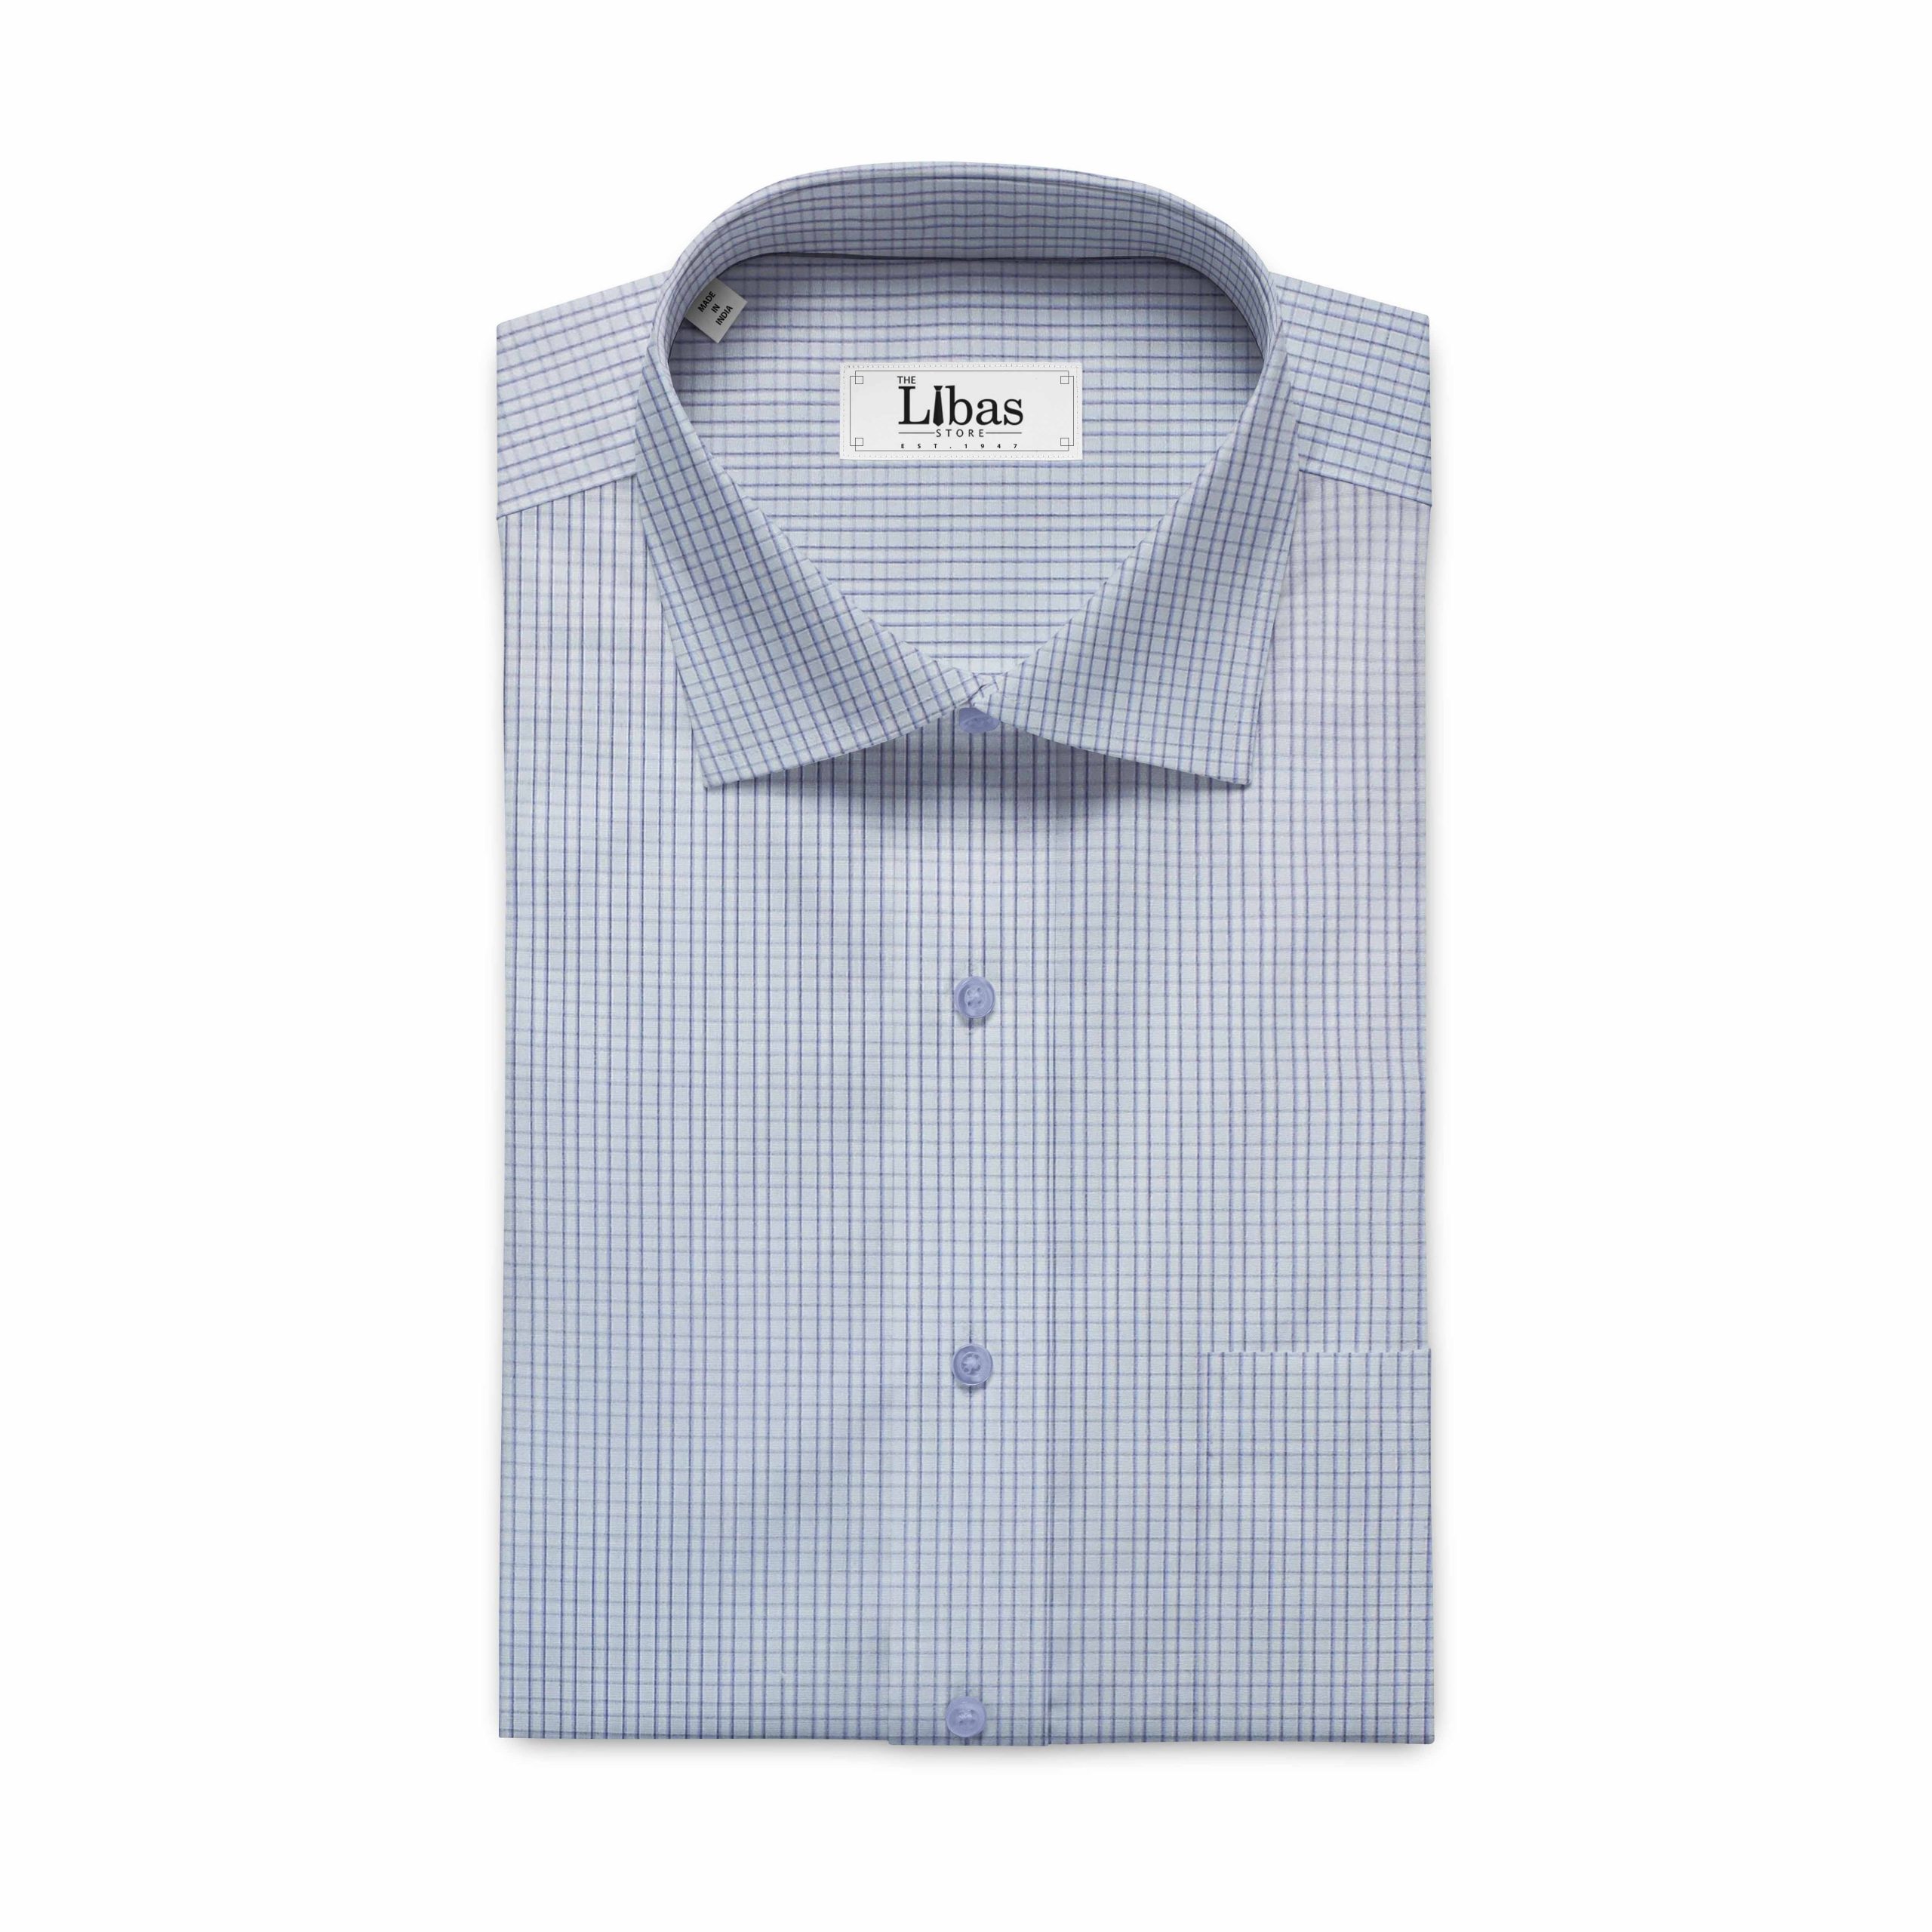 Soktas Men's White & Blue Giza Cotton Check Shirt Fabric